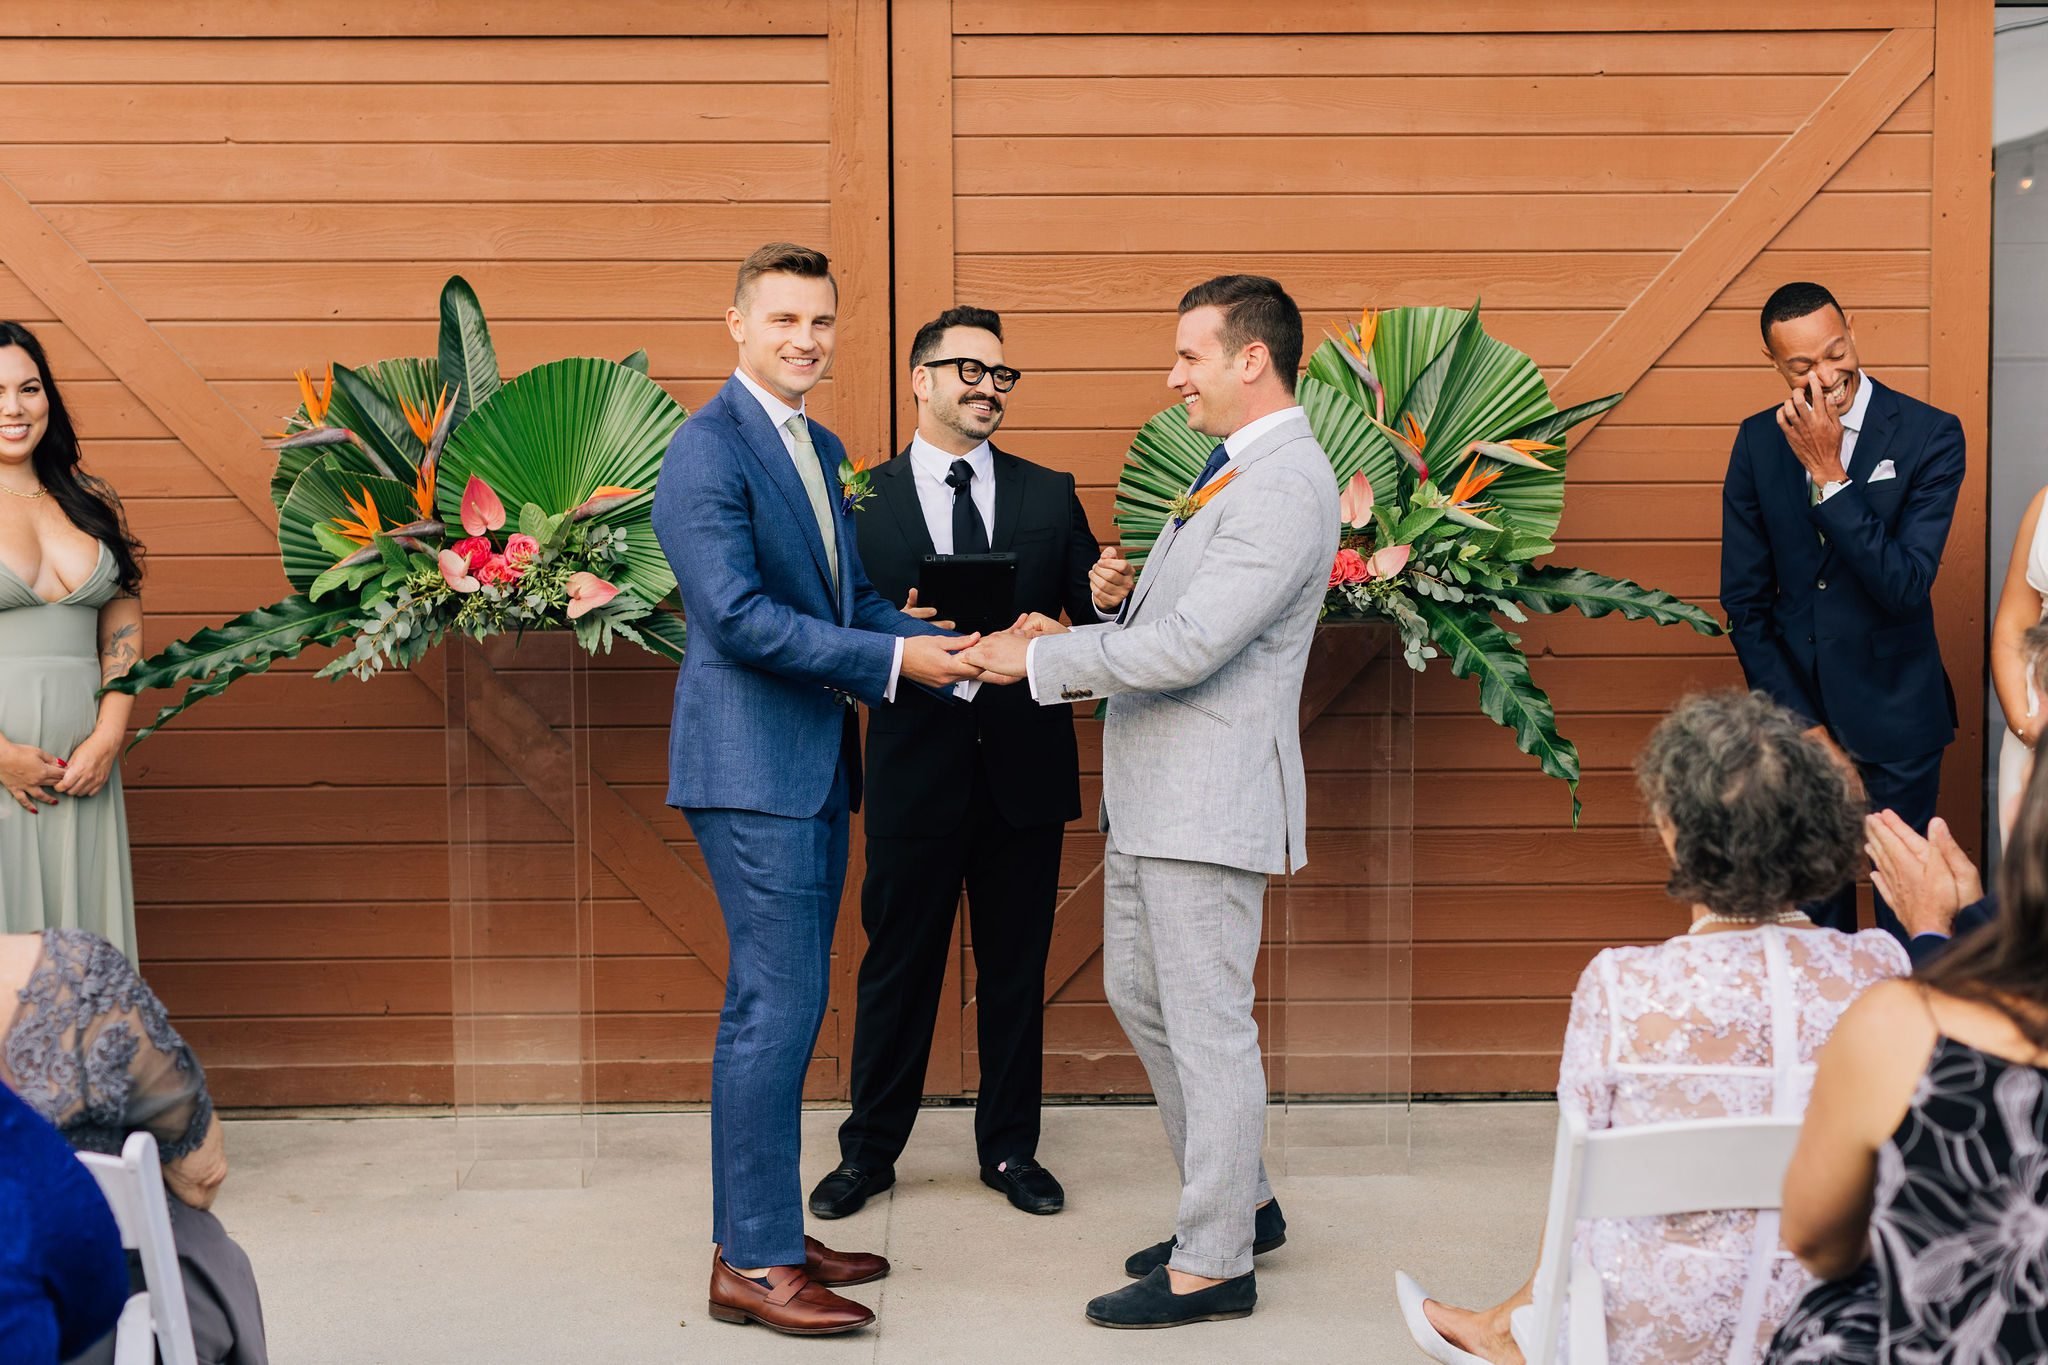 LA hair and makeup team provide men's grooming for gay wedding at ocean institute in dana point